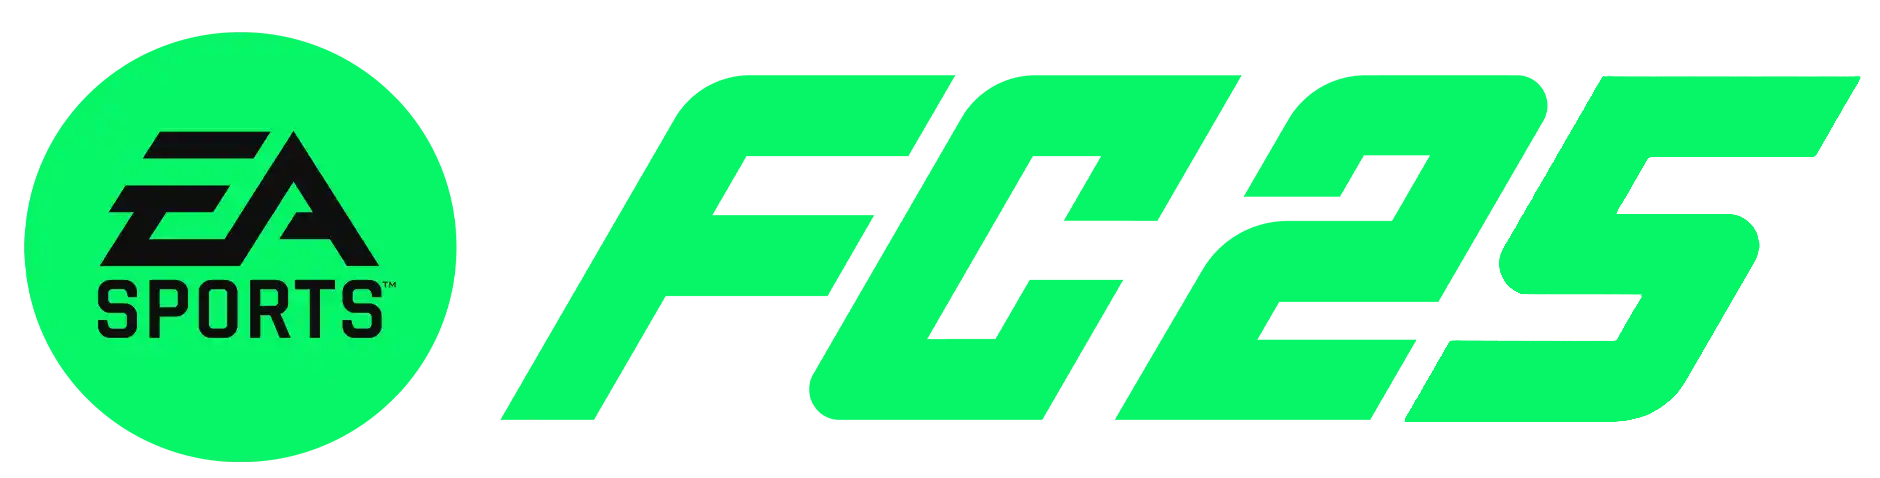 FC 25 Logo Green